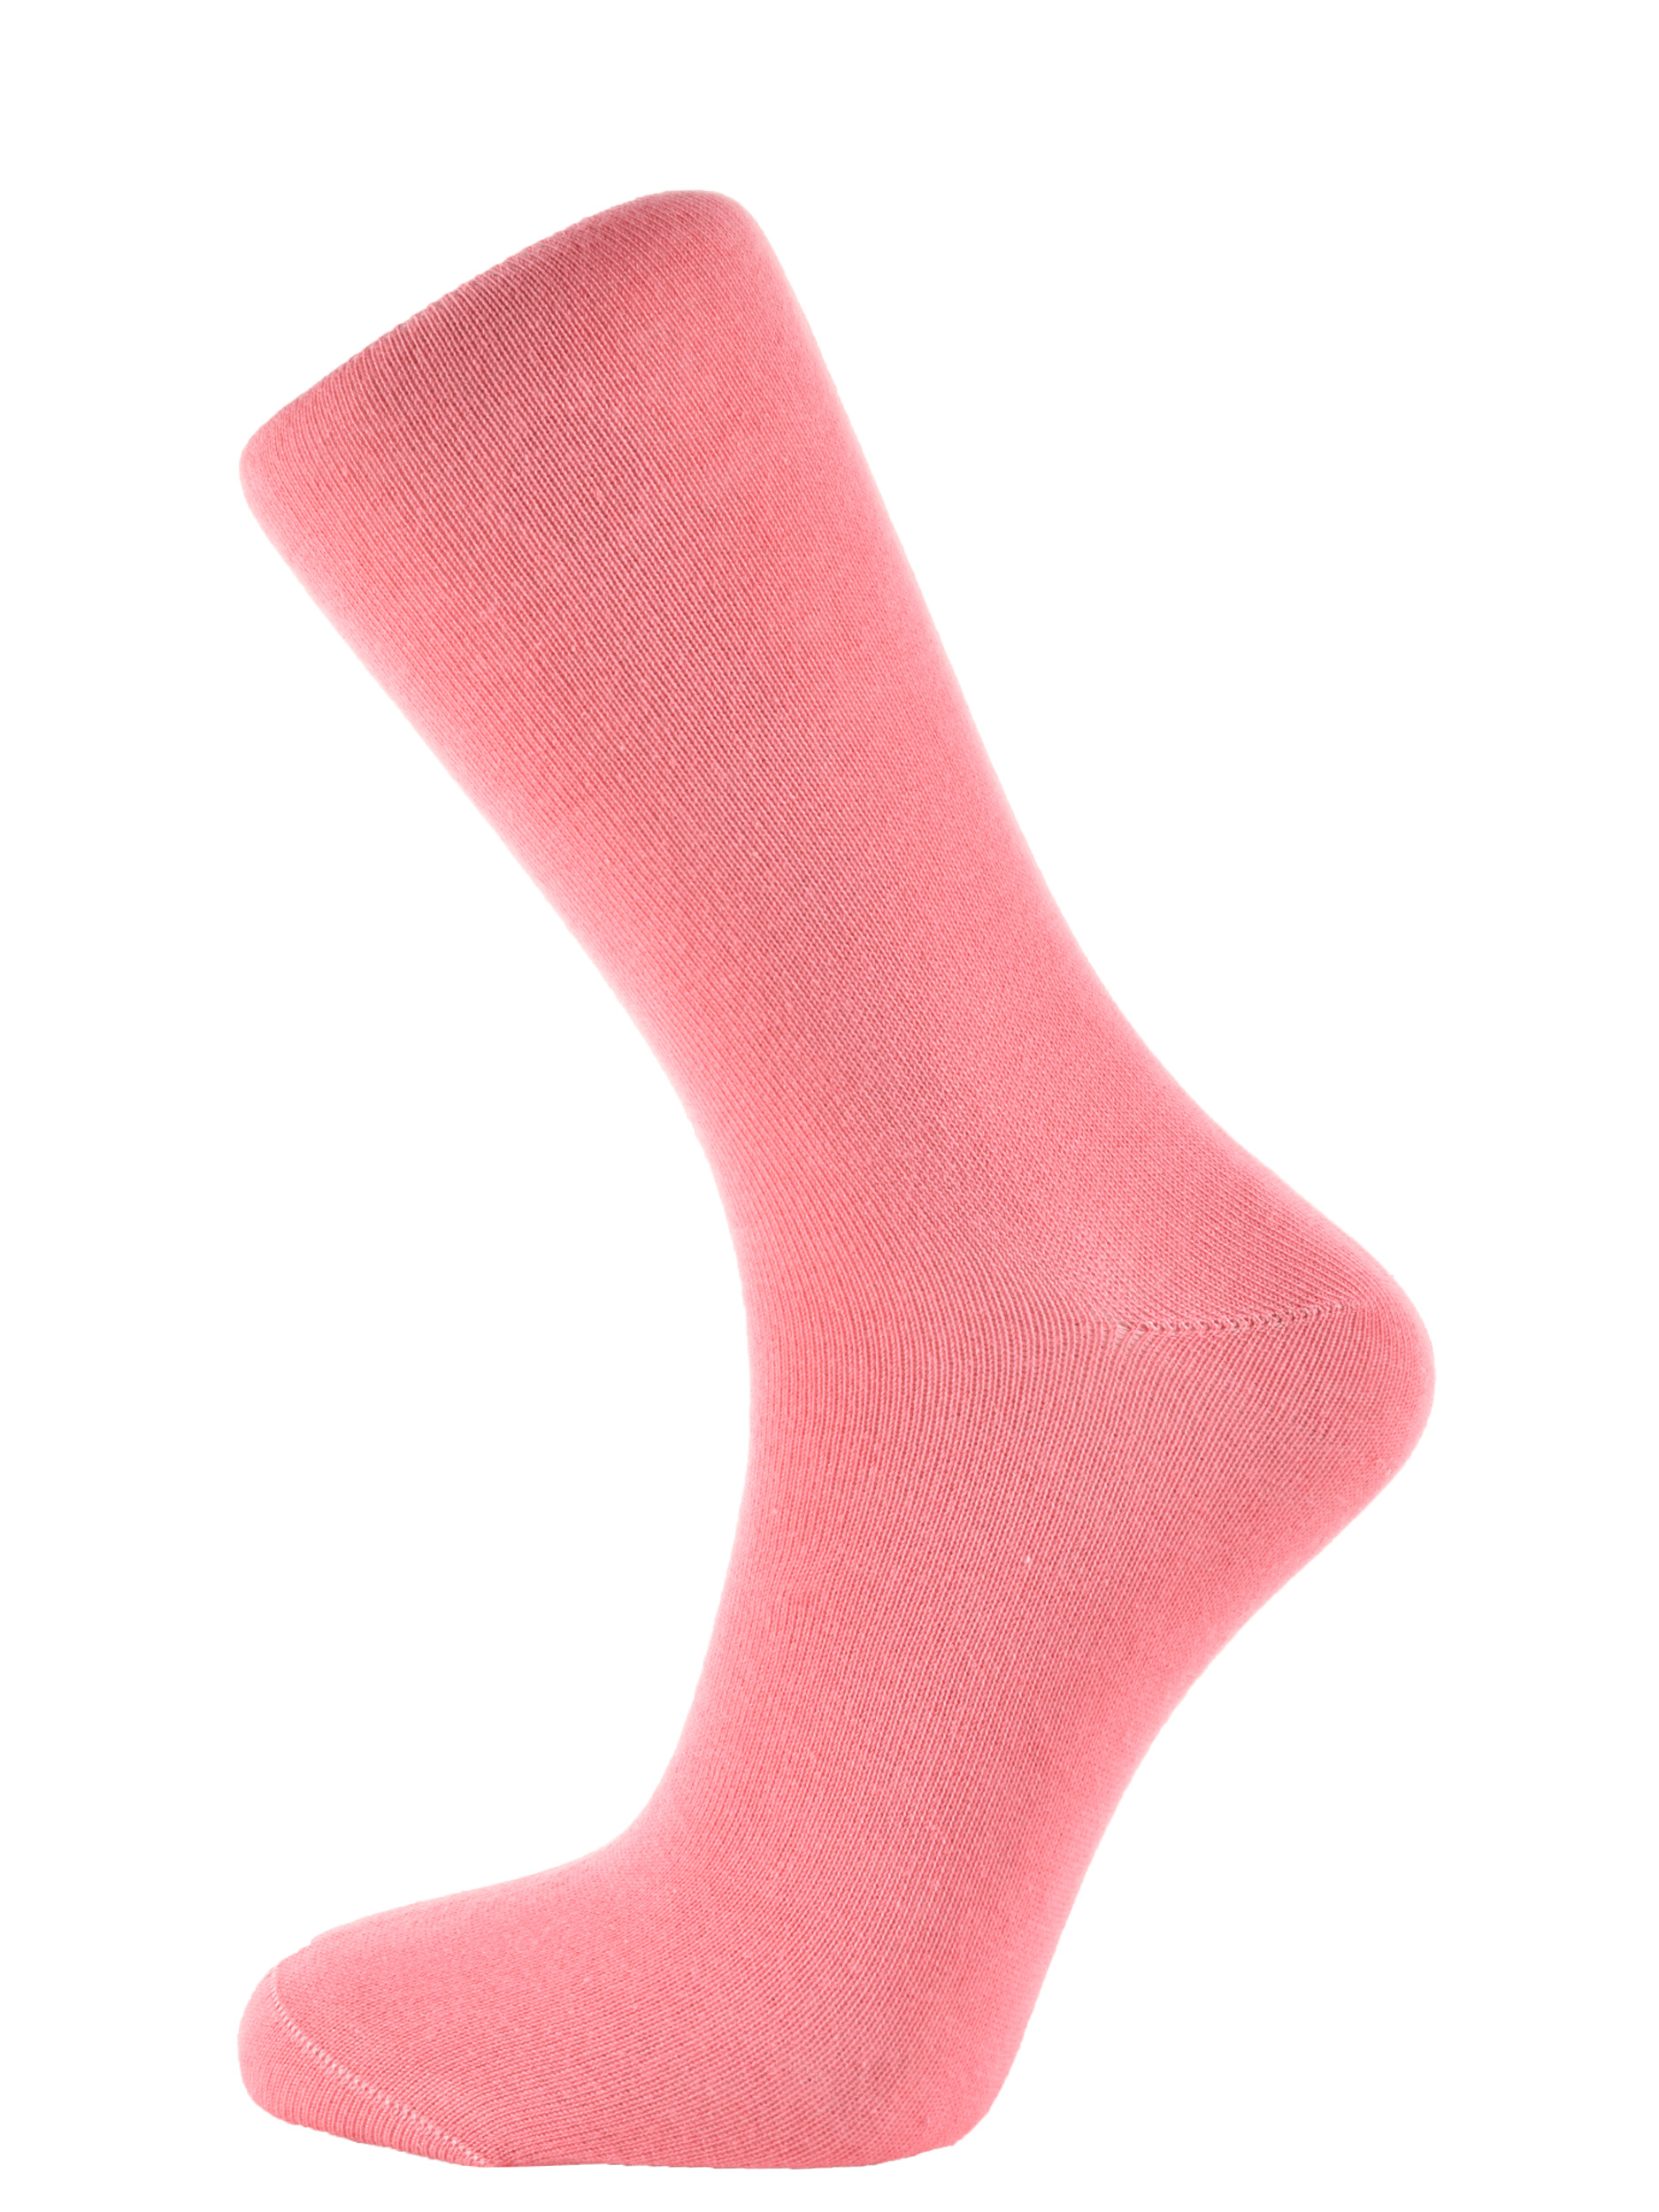 Horizon Lifestyle Everyday Pale Pink Socks